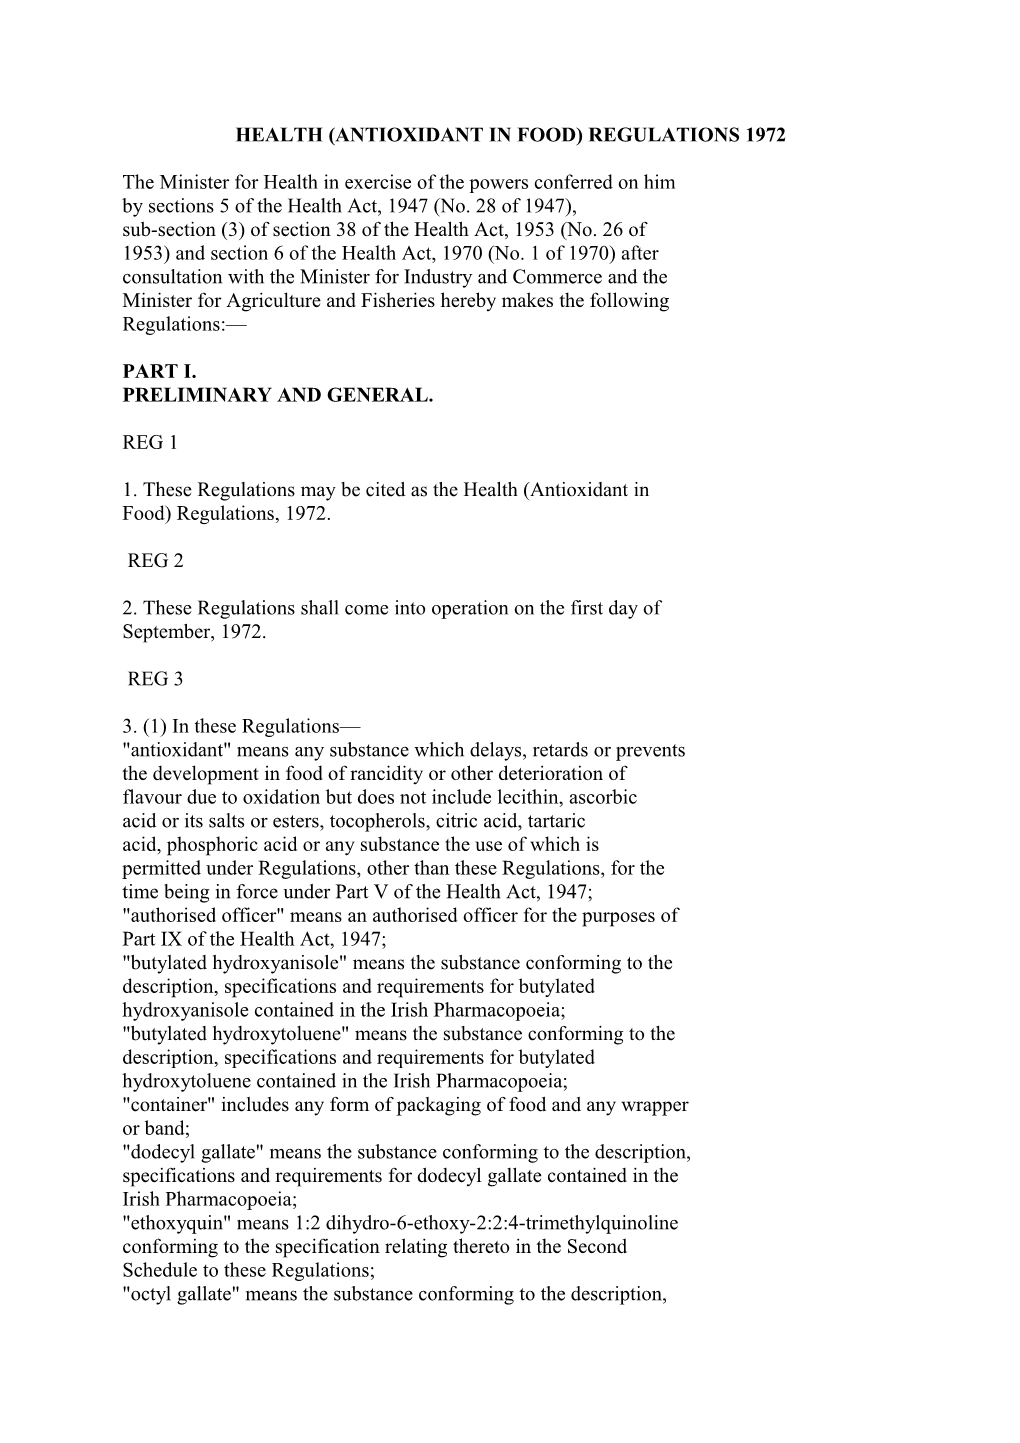 Health (Antioxidant in Food) Regulations 1972